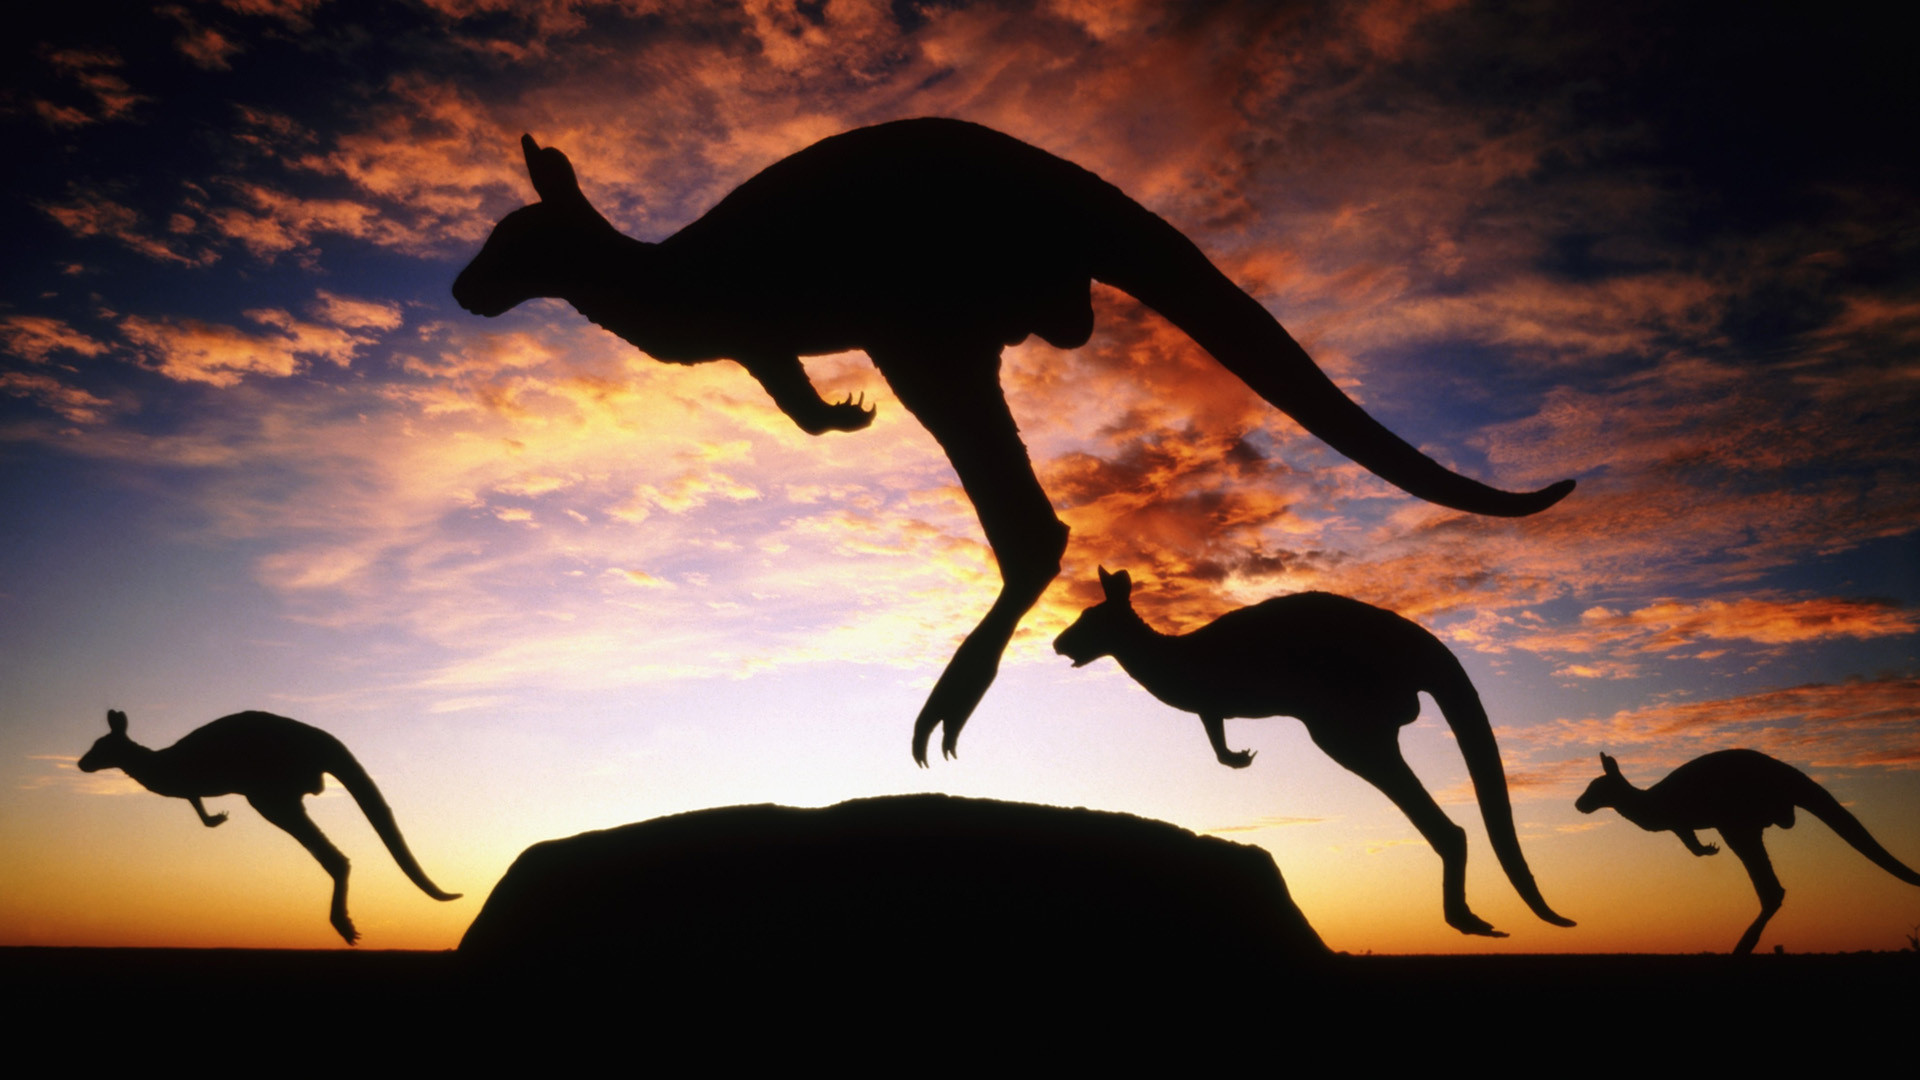 1920x1080 Kangaroo HD Wallpaper | Background Image |  | ID:173008 - Wallpaper  Abyss